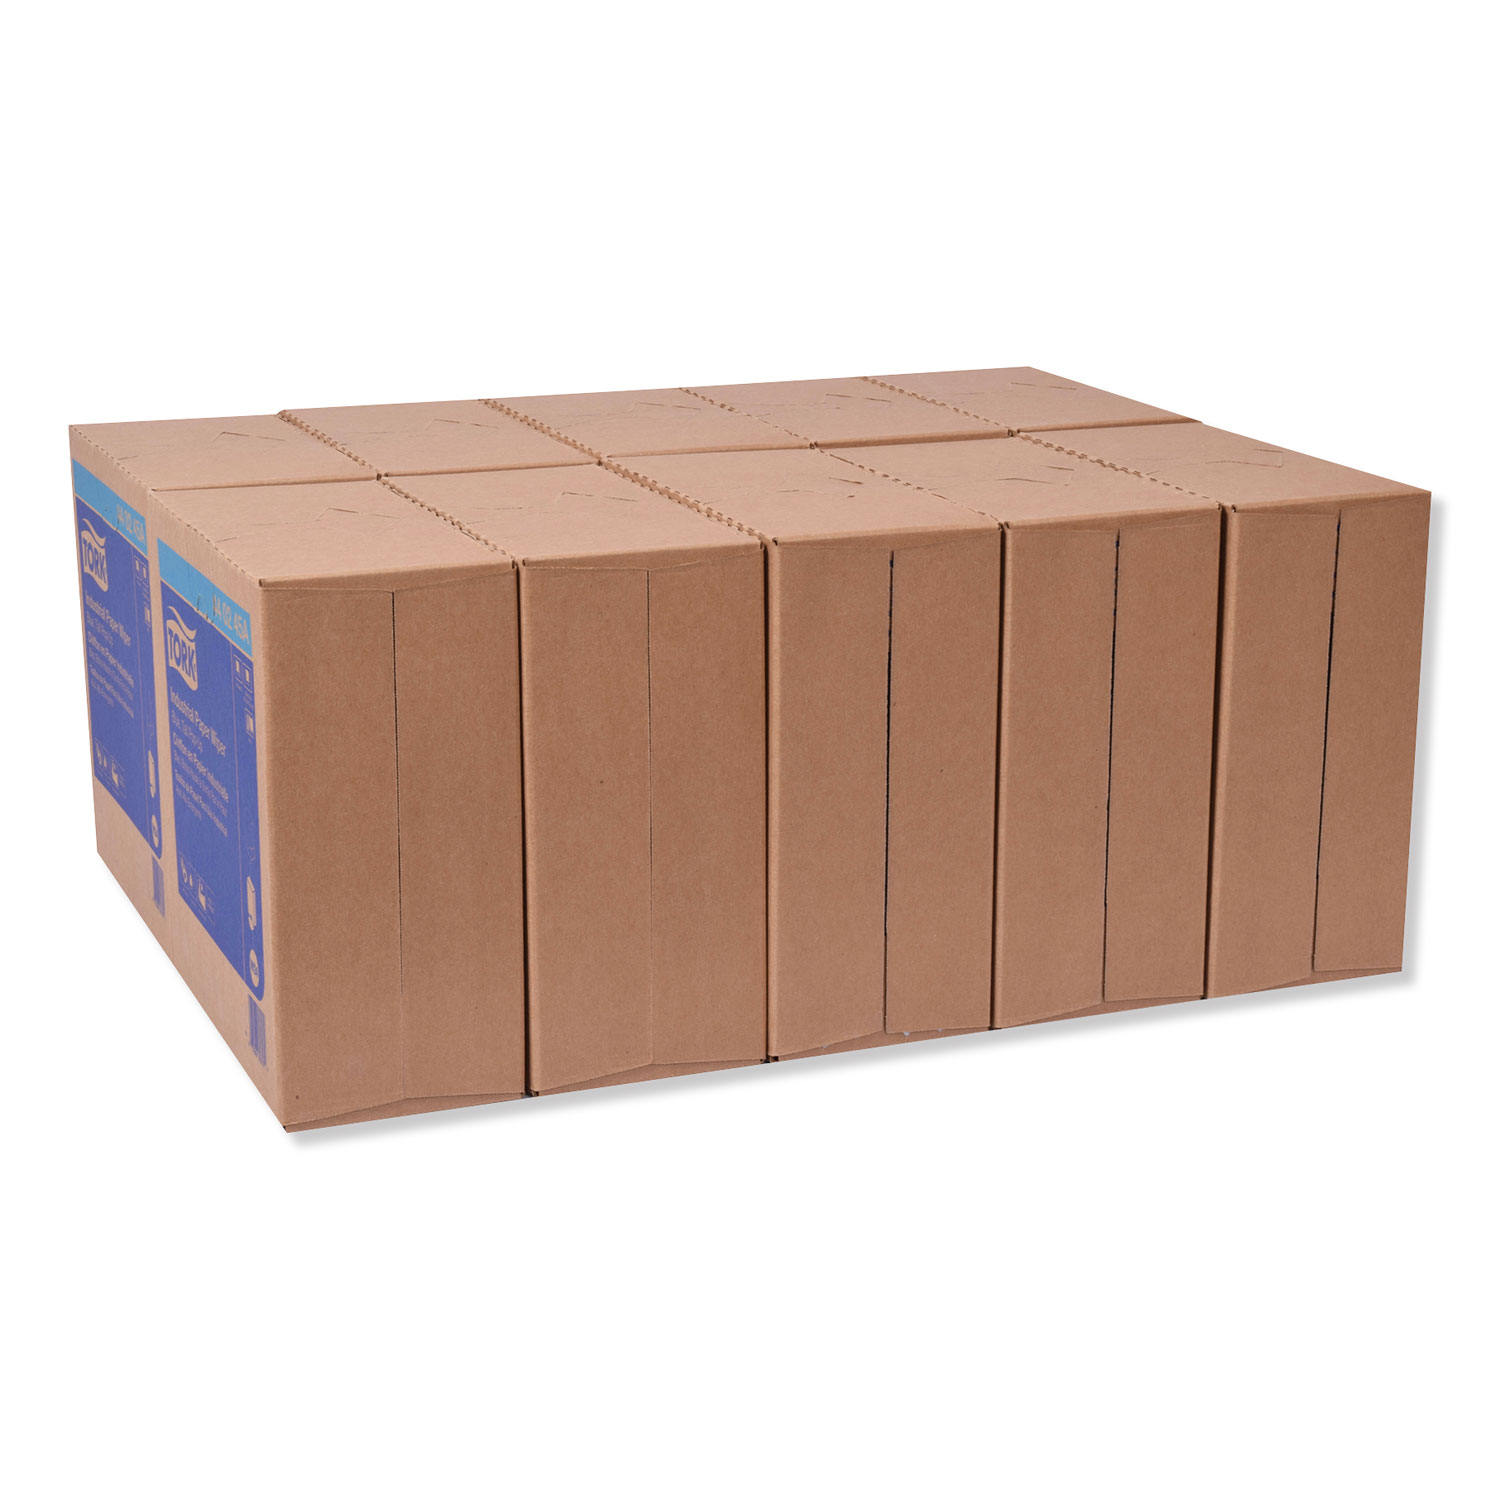 Industrial Paper Wiper, 4-Ply, 8.54 x 16.5, Blue, 90 Towels/Box, 10 Box/Carton